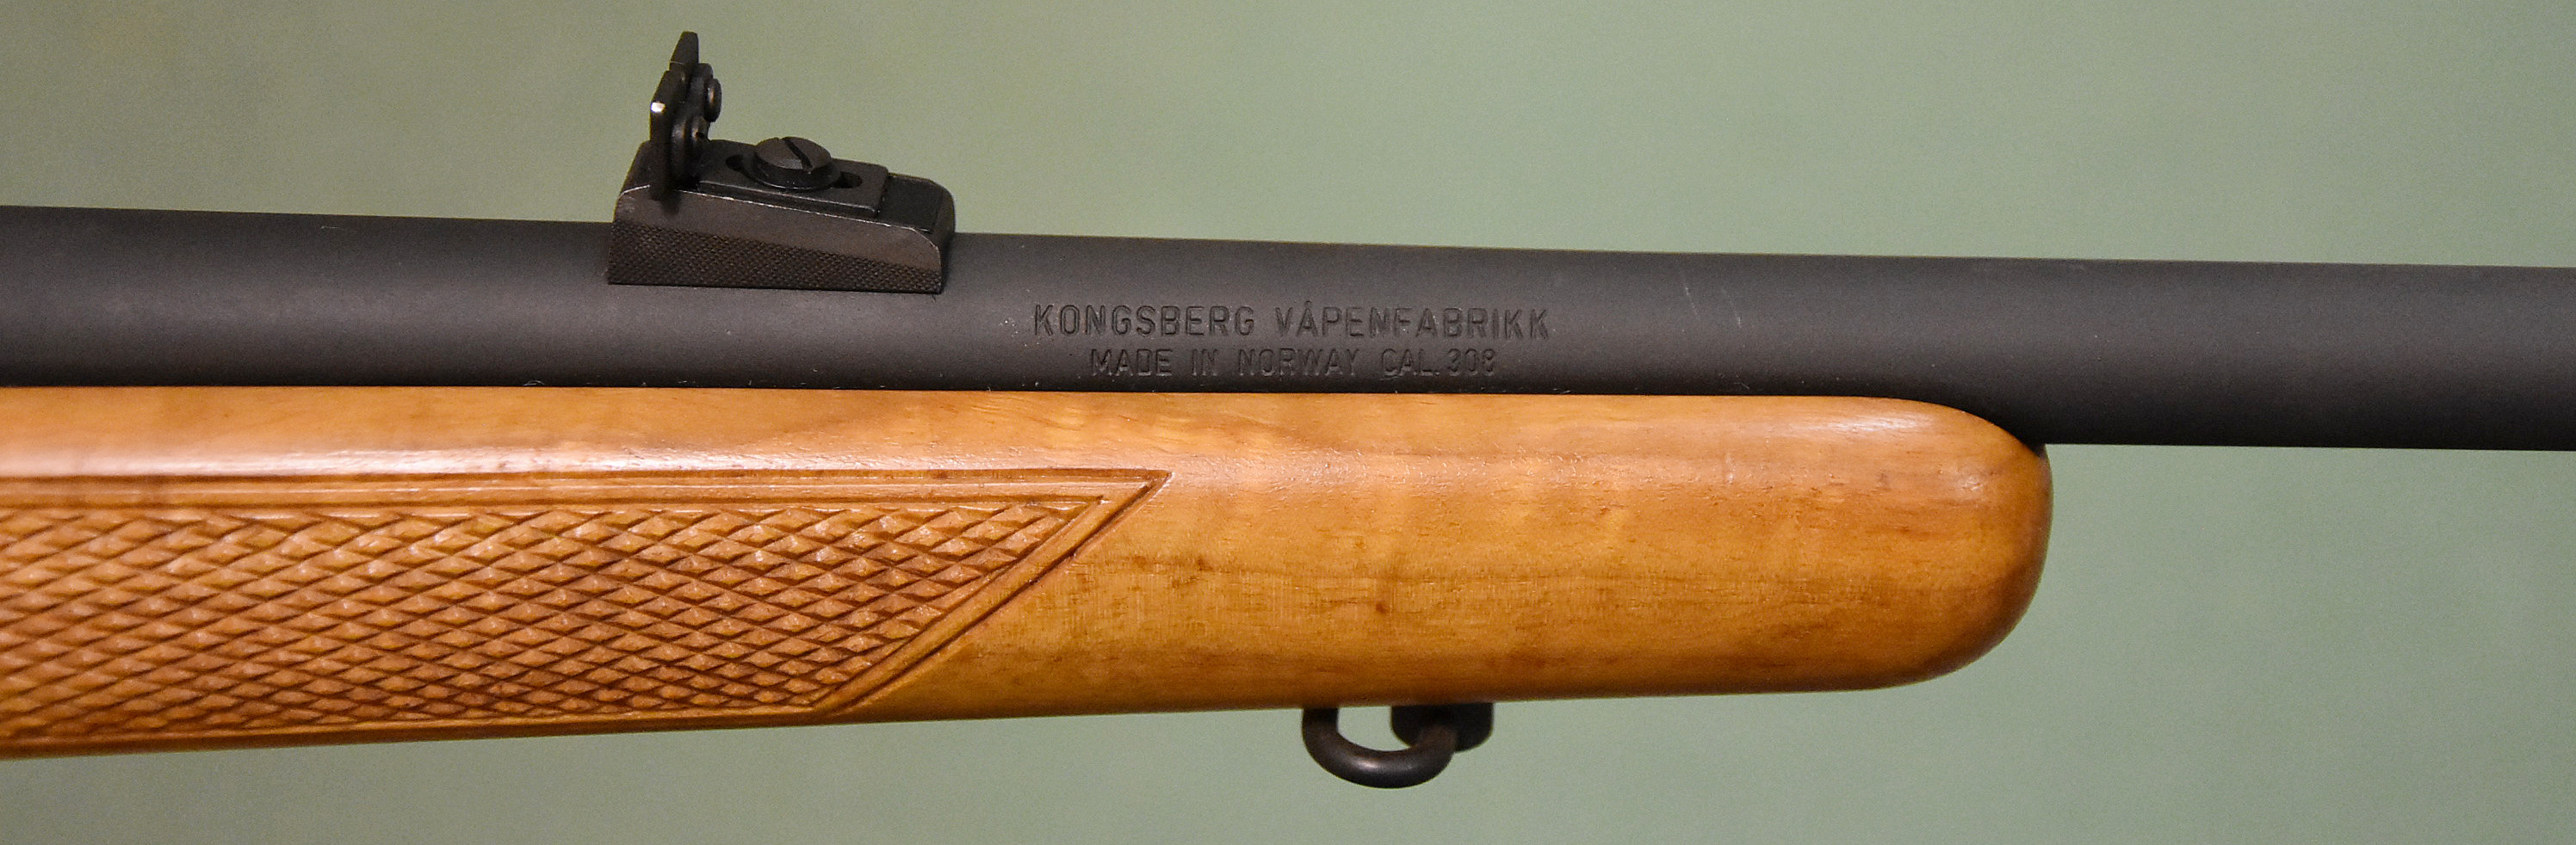 ./guns/rifle/bilder/Rifle-Kongsberg-Mauser-M83-Gave-0011-4.JPG